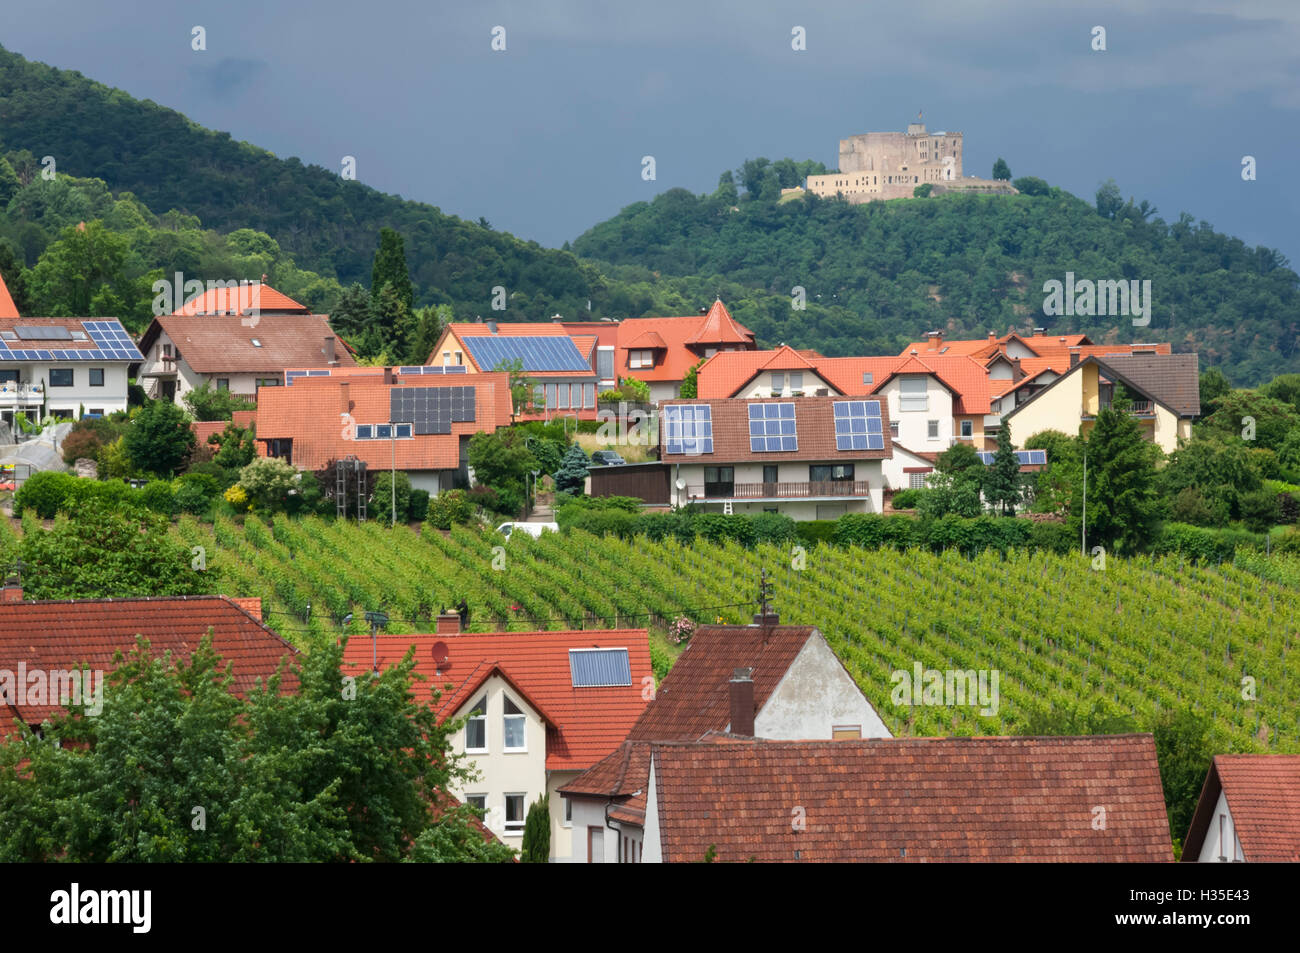 Village of St. Martin amongst vineyards in the Pfalz area, Germany Stock Photo